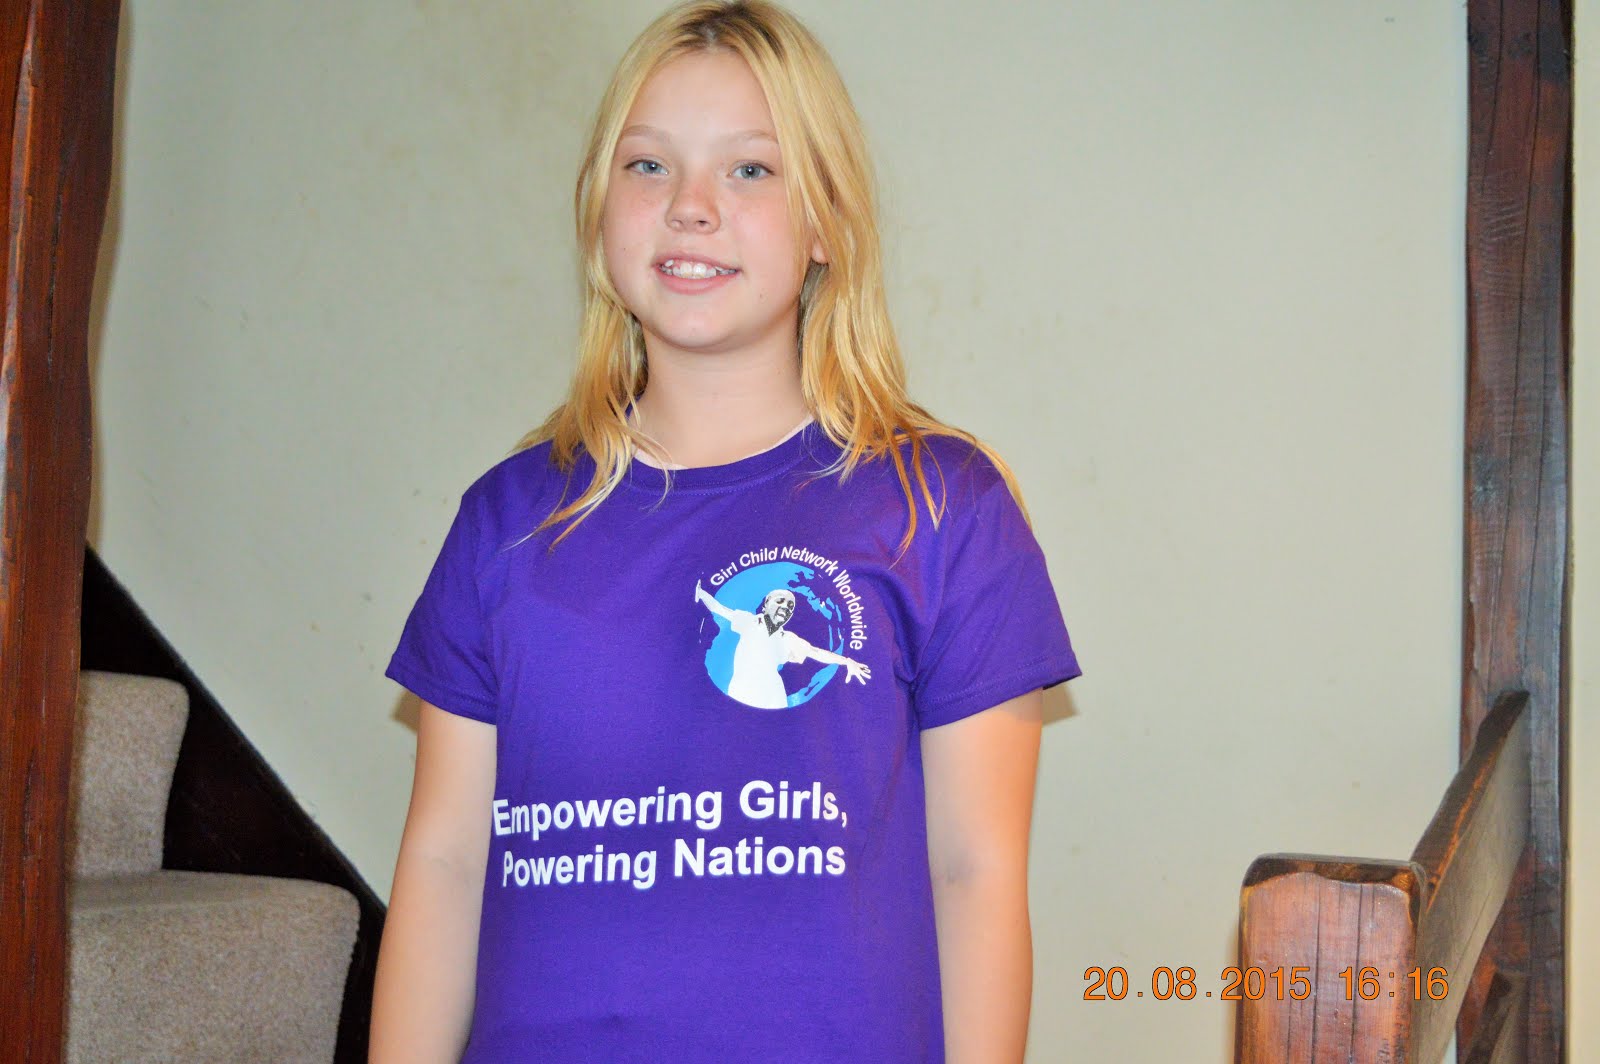 Empowering Girls, Powering Nations